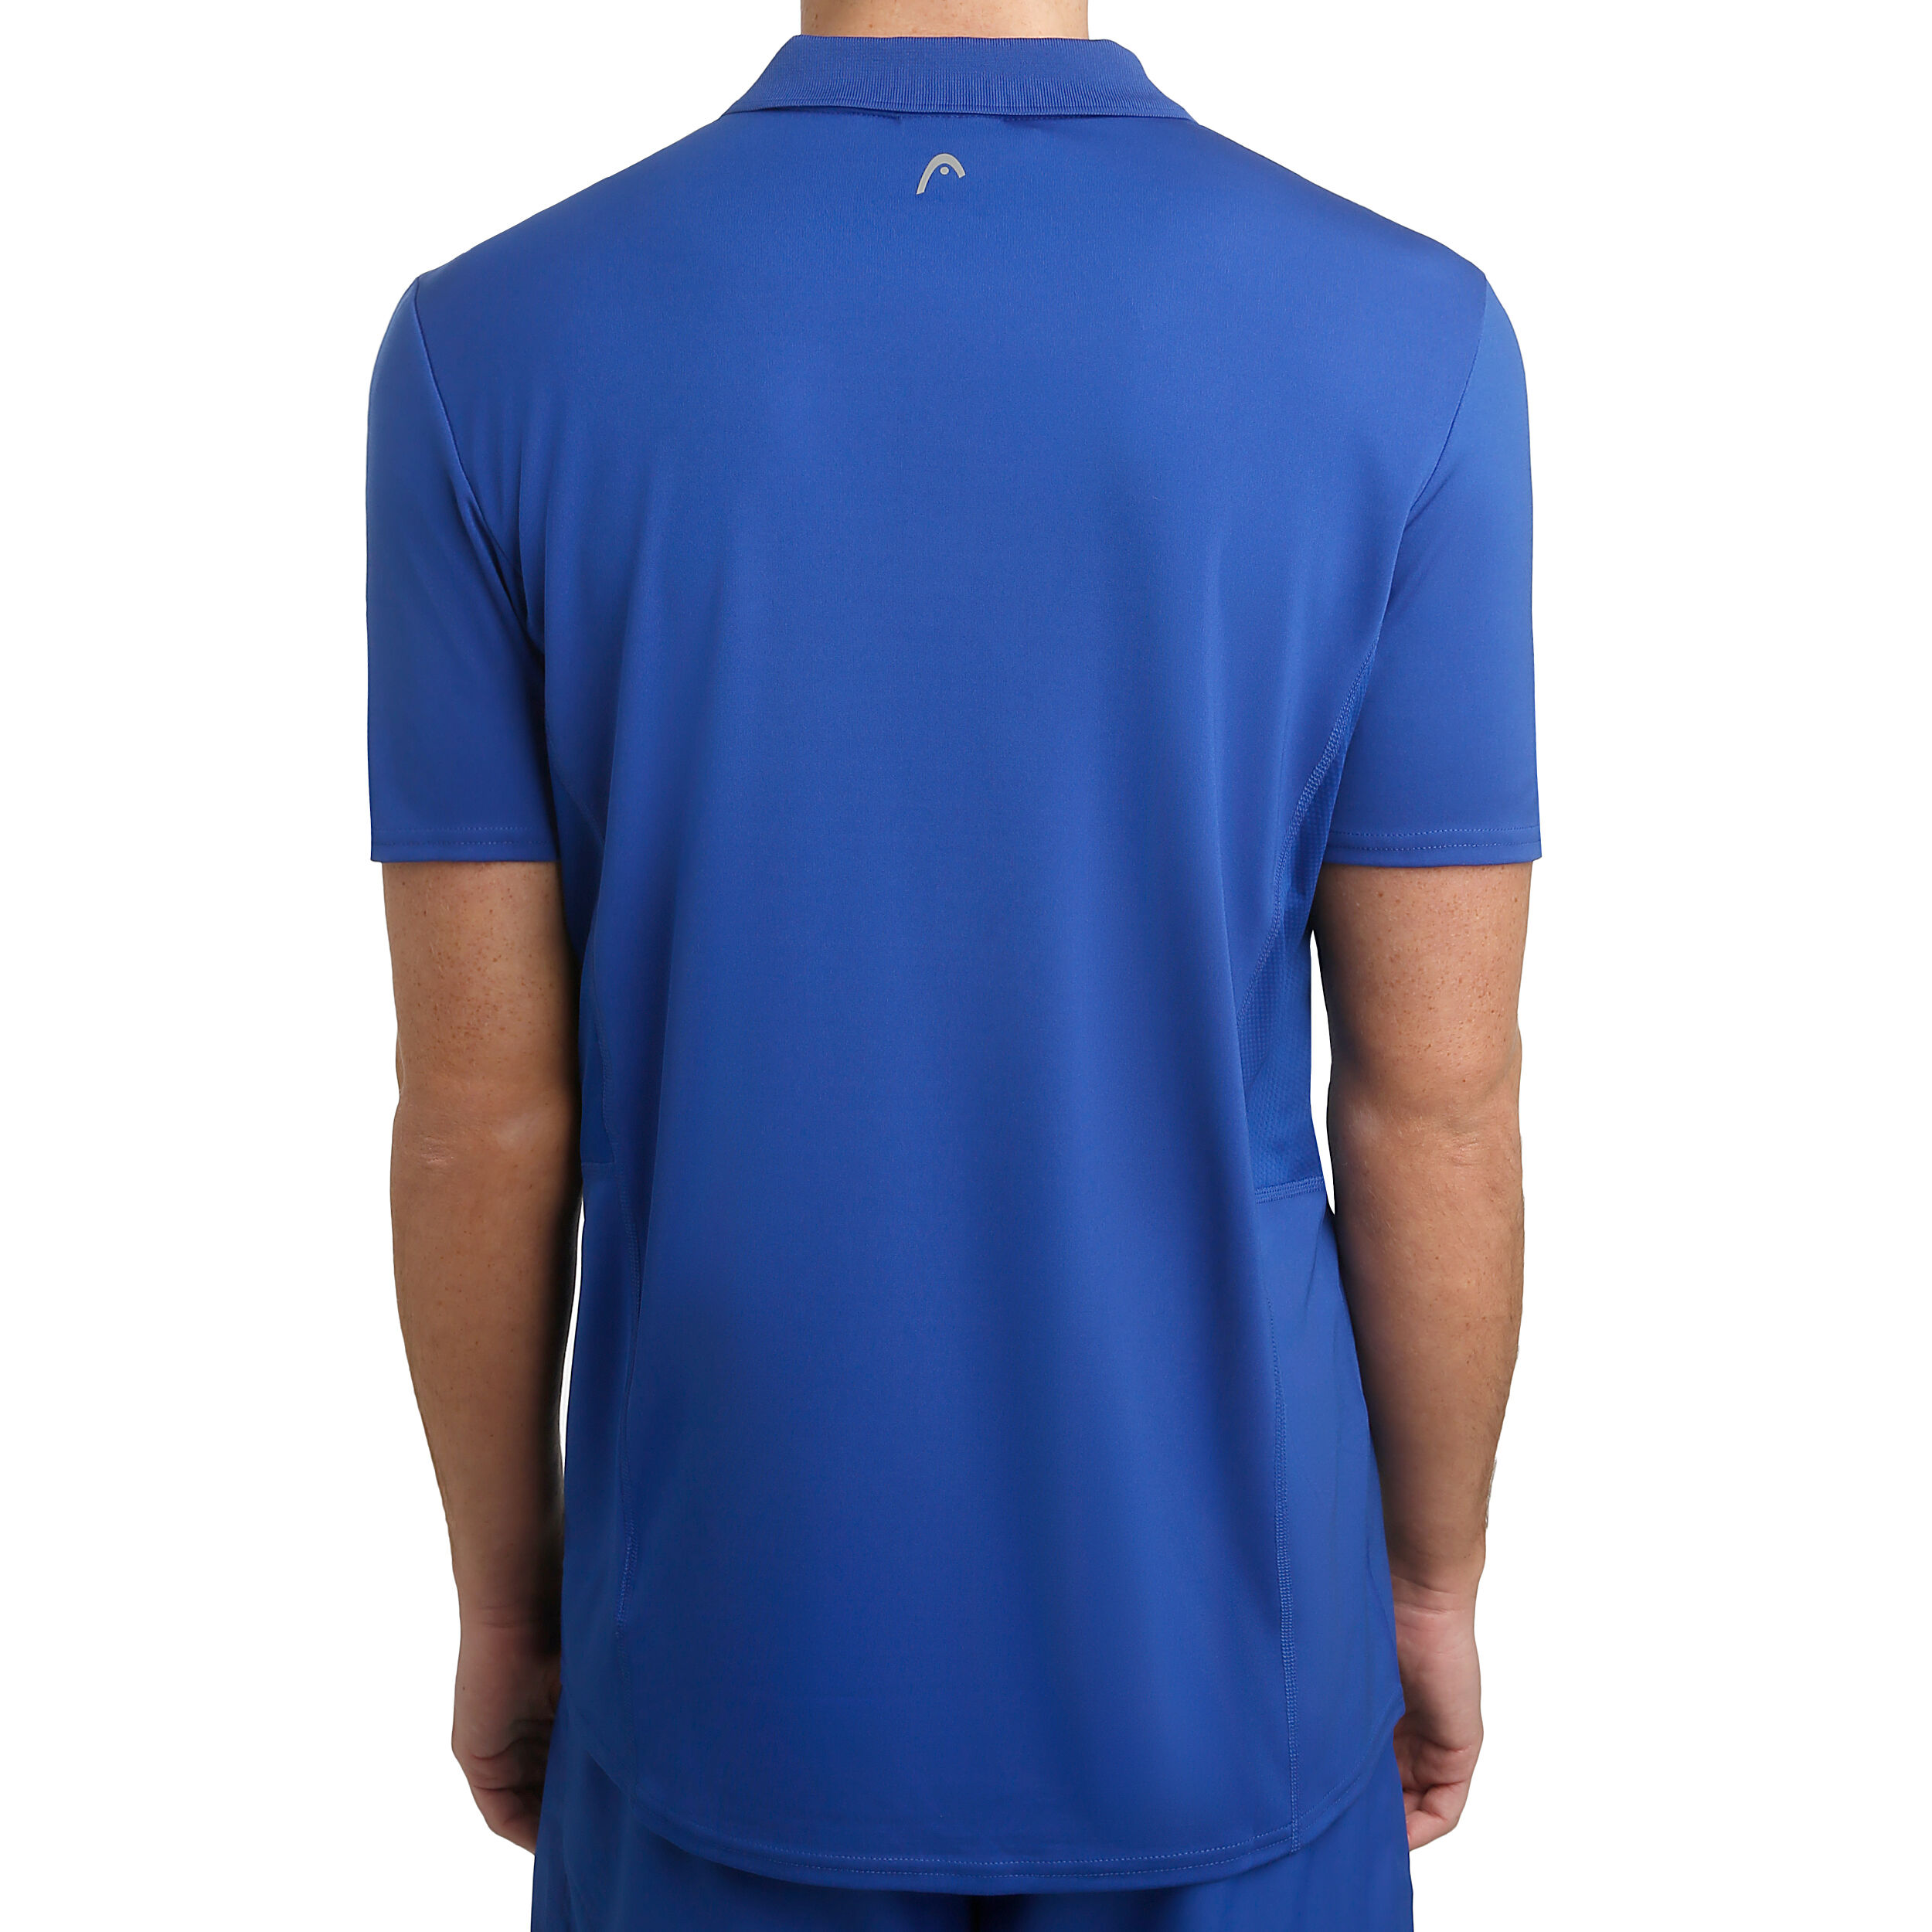 Visiter la boutique HEADHEAD Club Tech Polo Shirt M Polos Homme Bleu FR Taille Fabricant : S S 